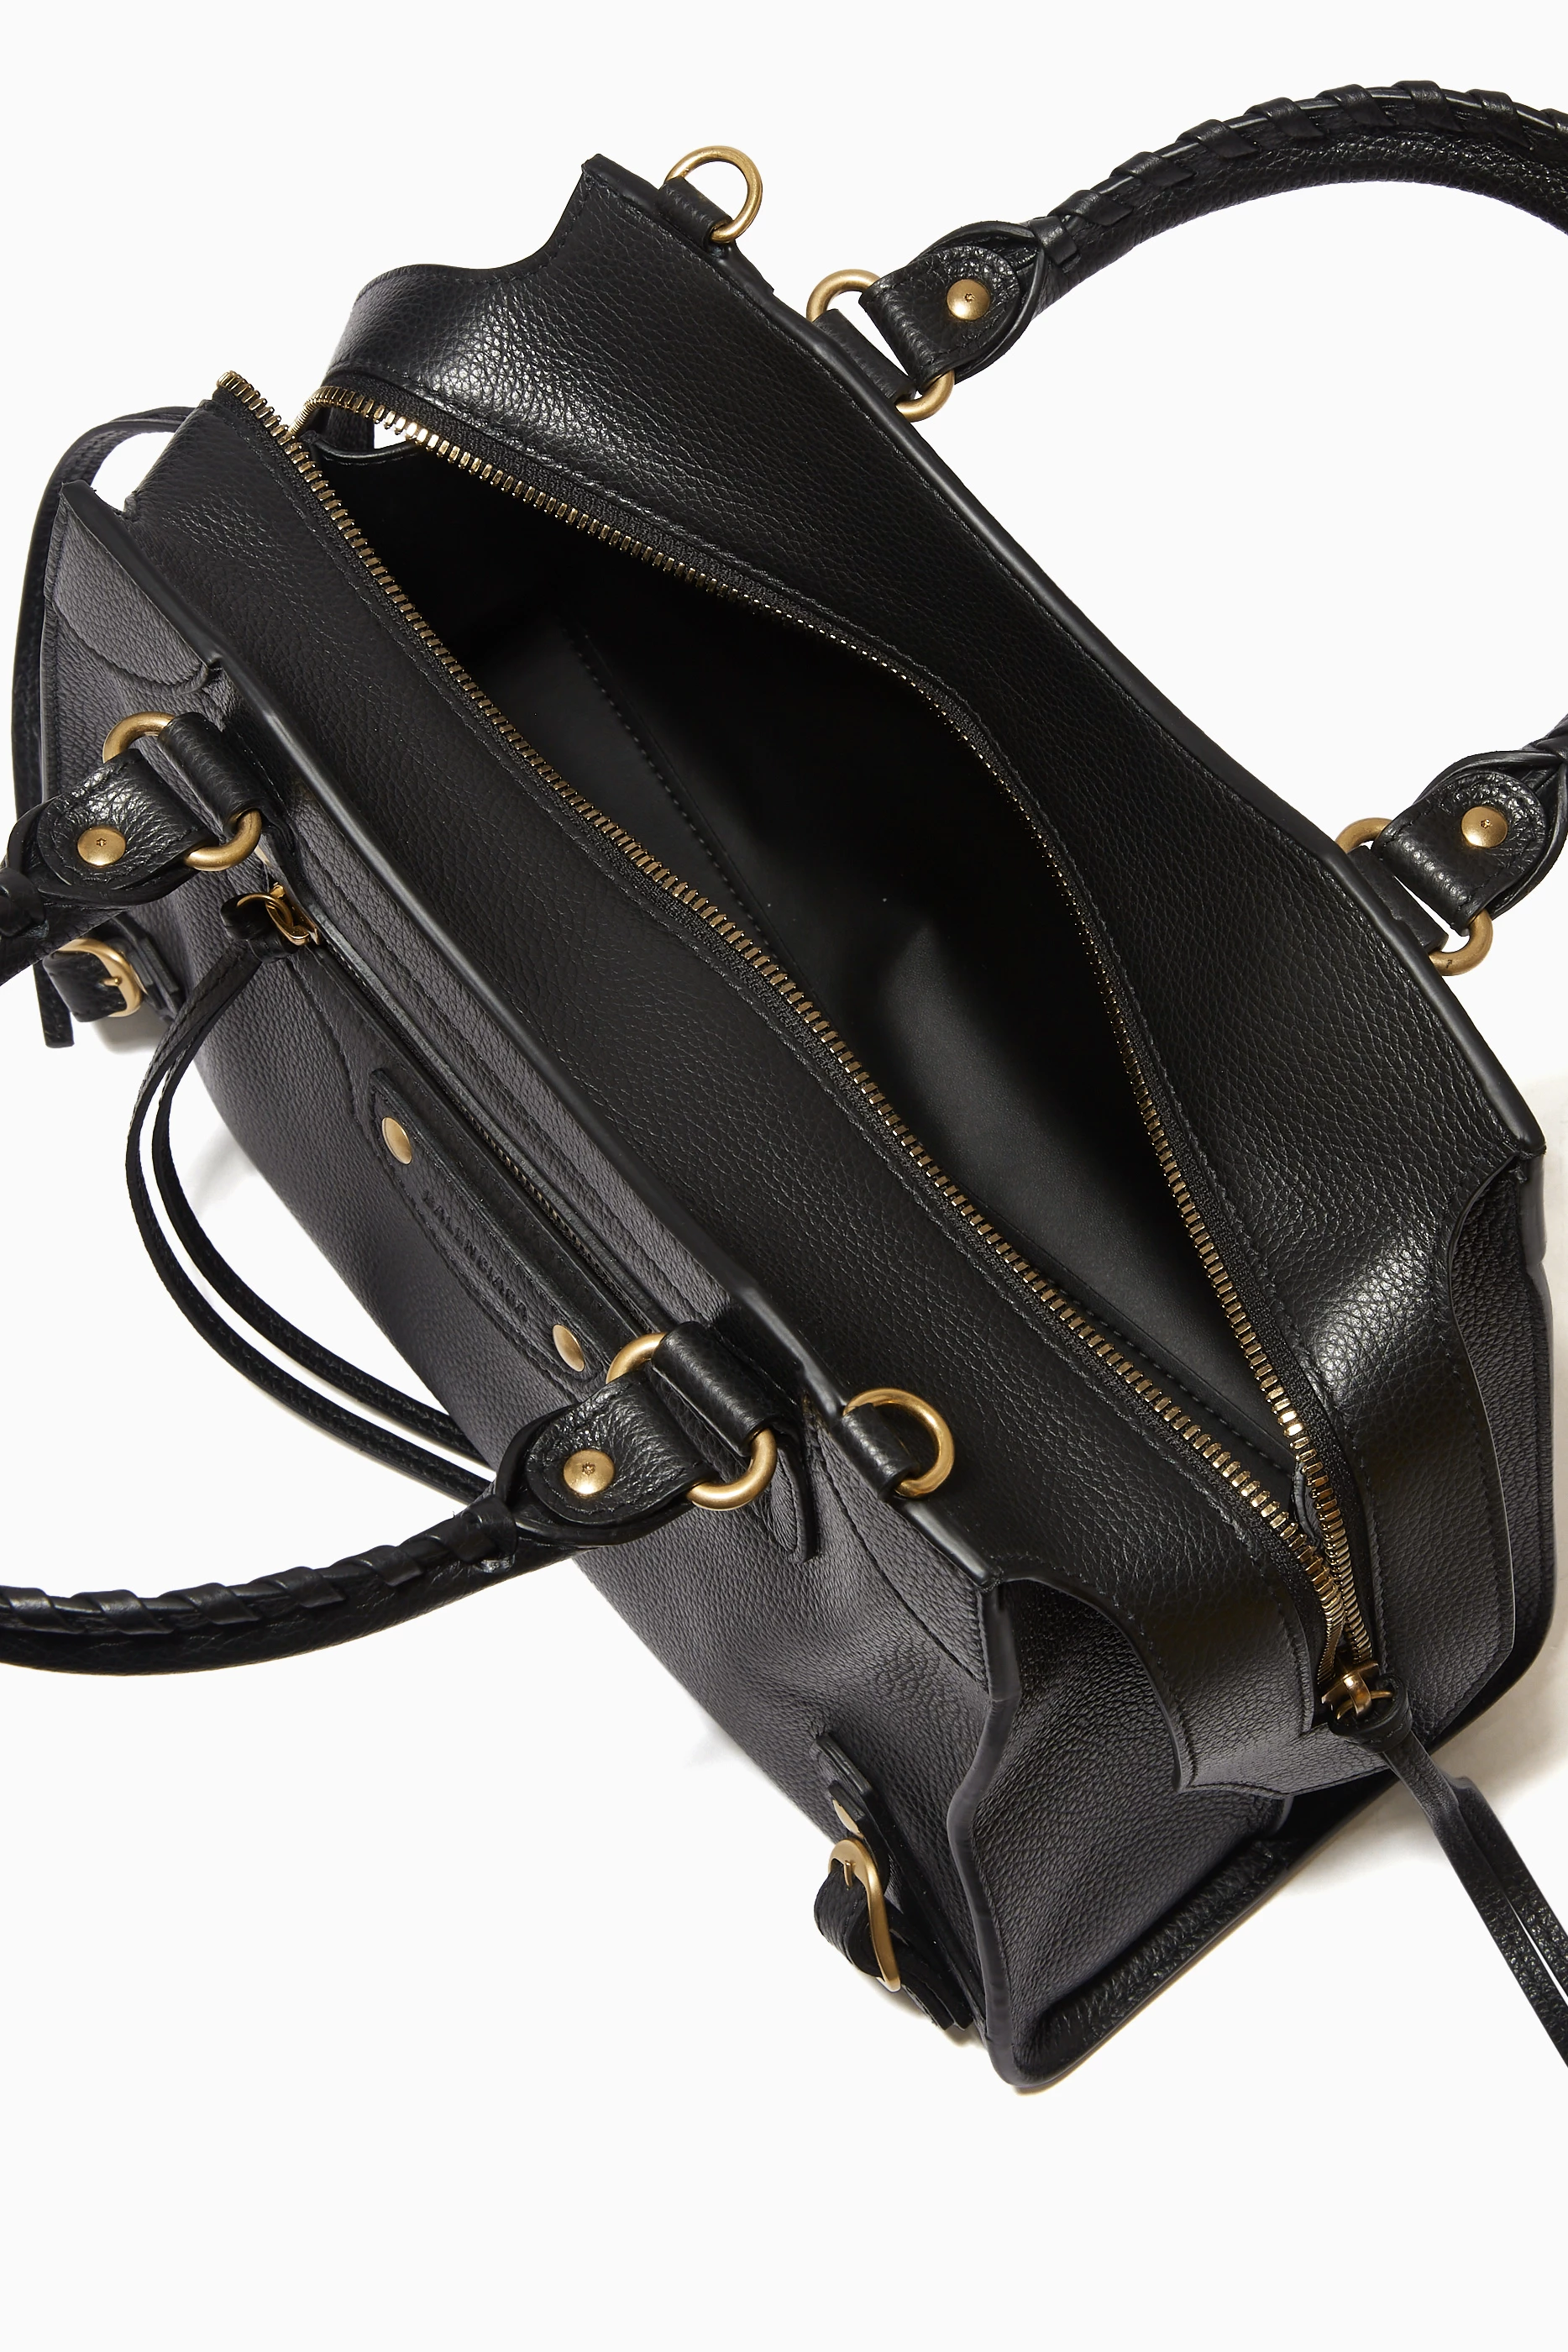 neo classic small handbag